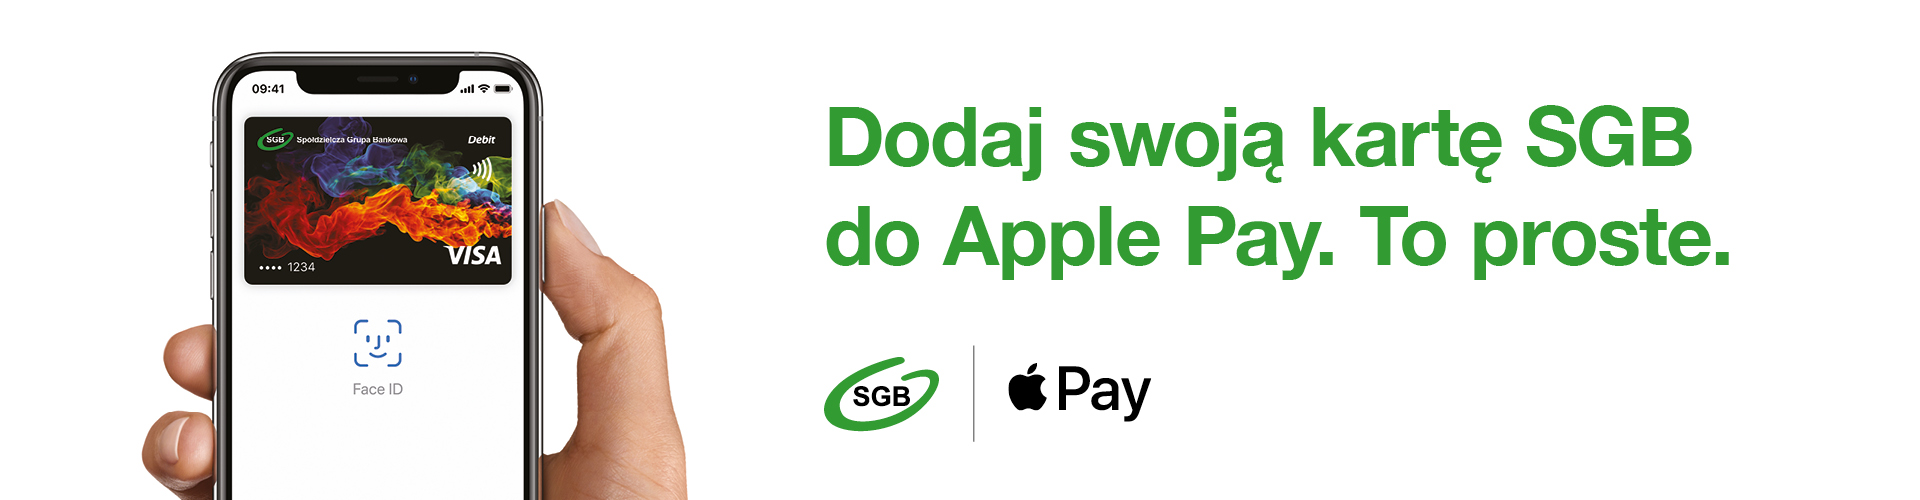 SGB_Apple_pay_VISA_1920x500